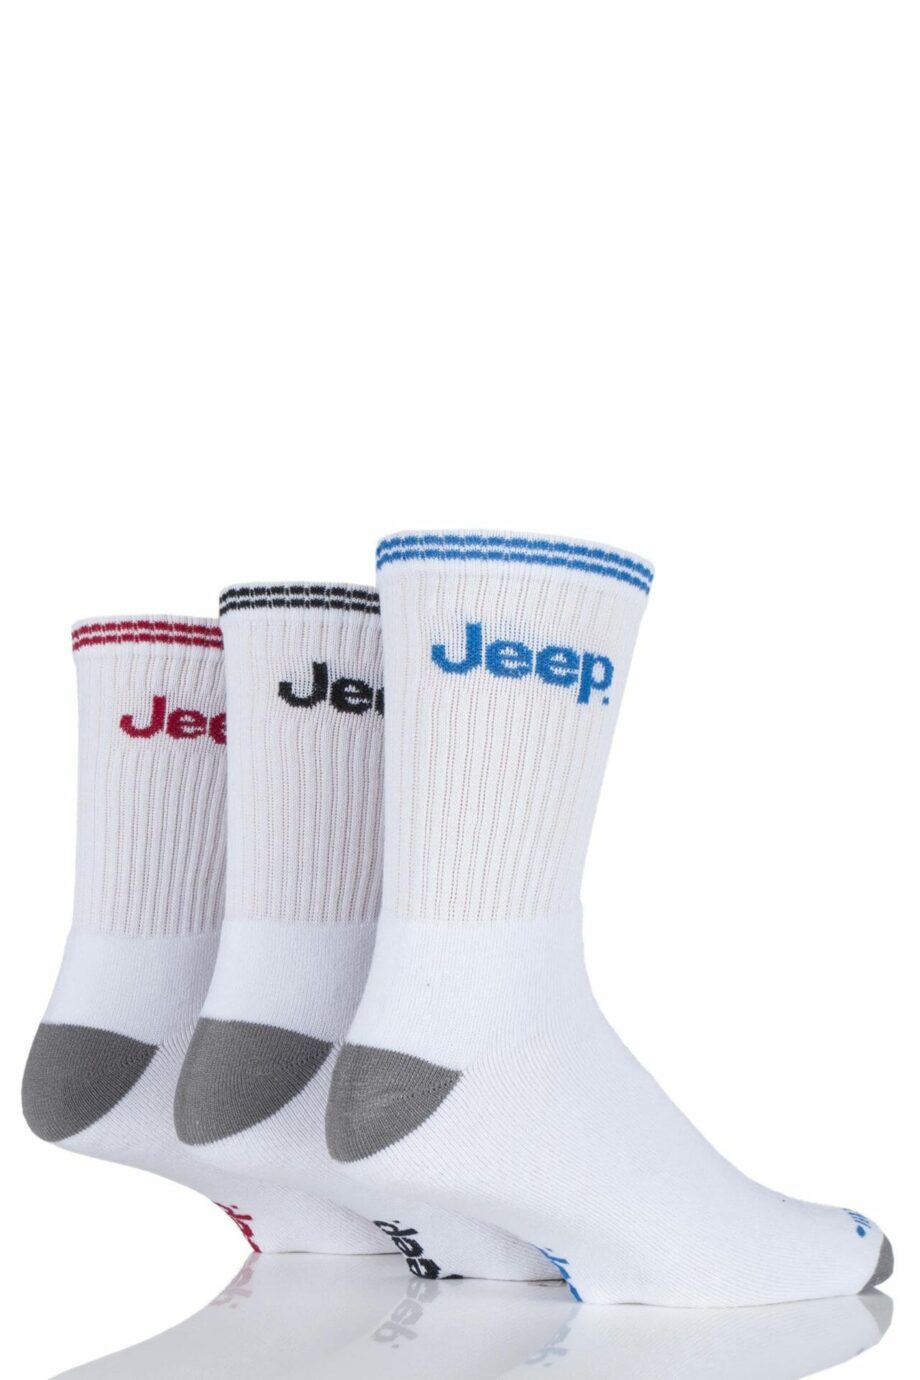 3 Pair White Classic Cotton Sports Socks Men's 6-11 Mens - Jeep